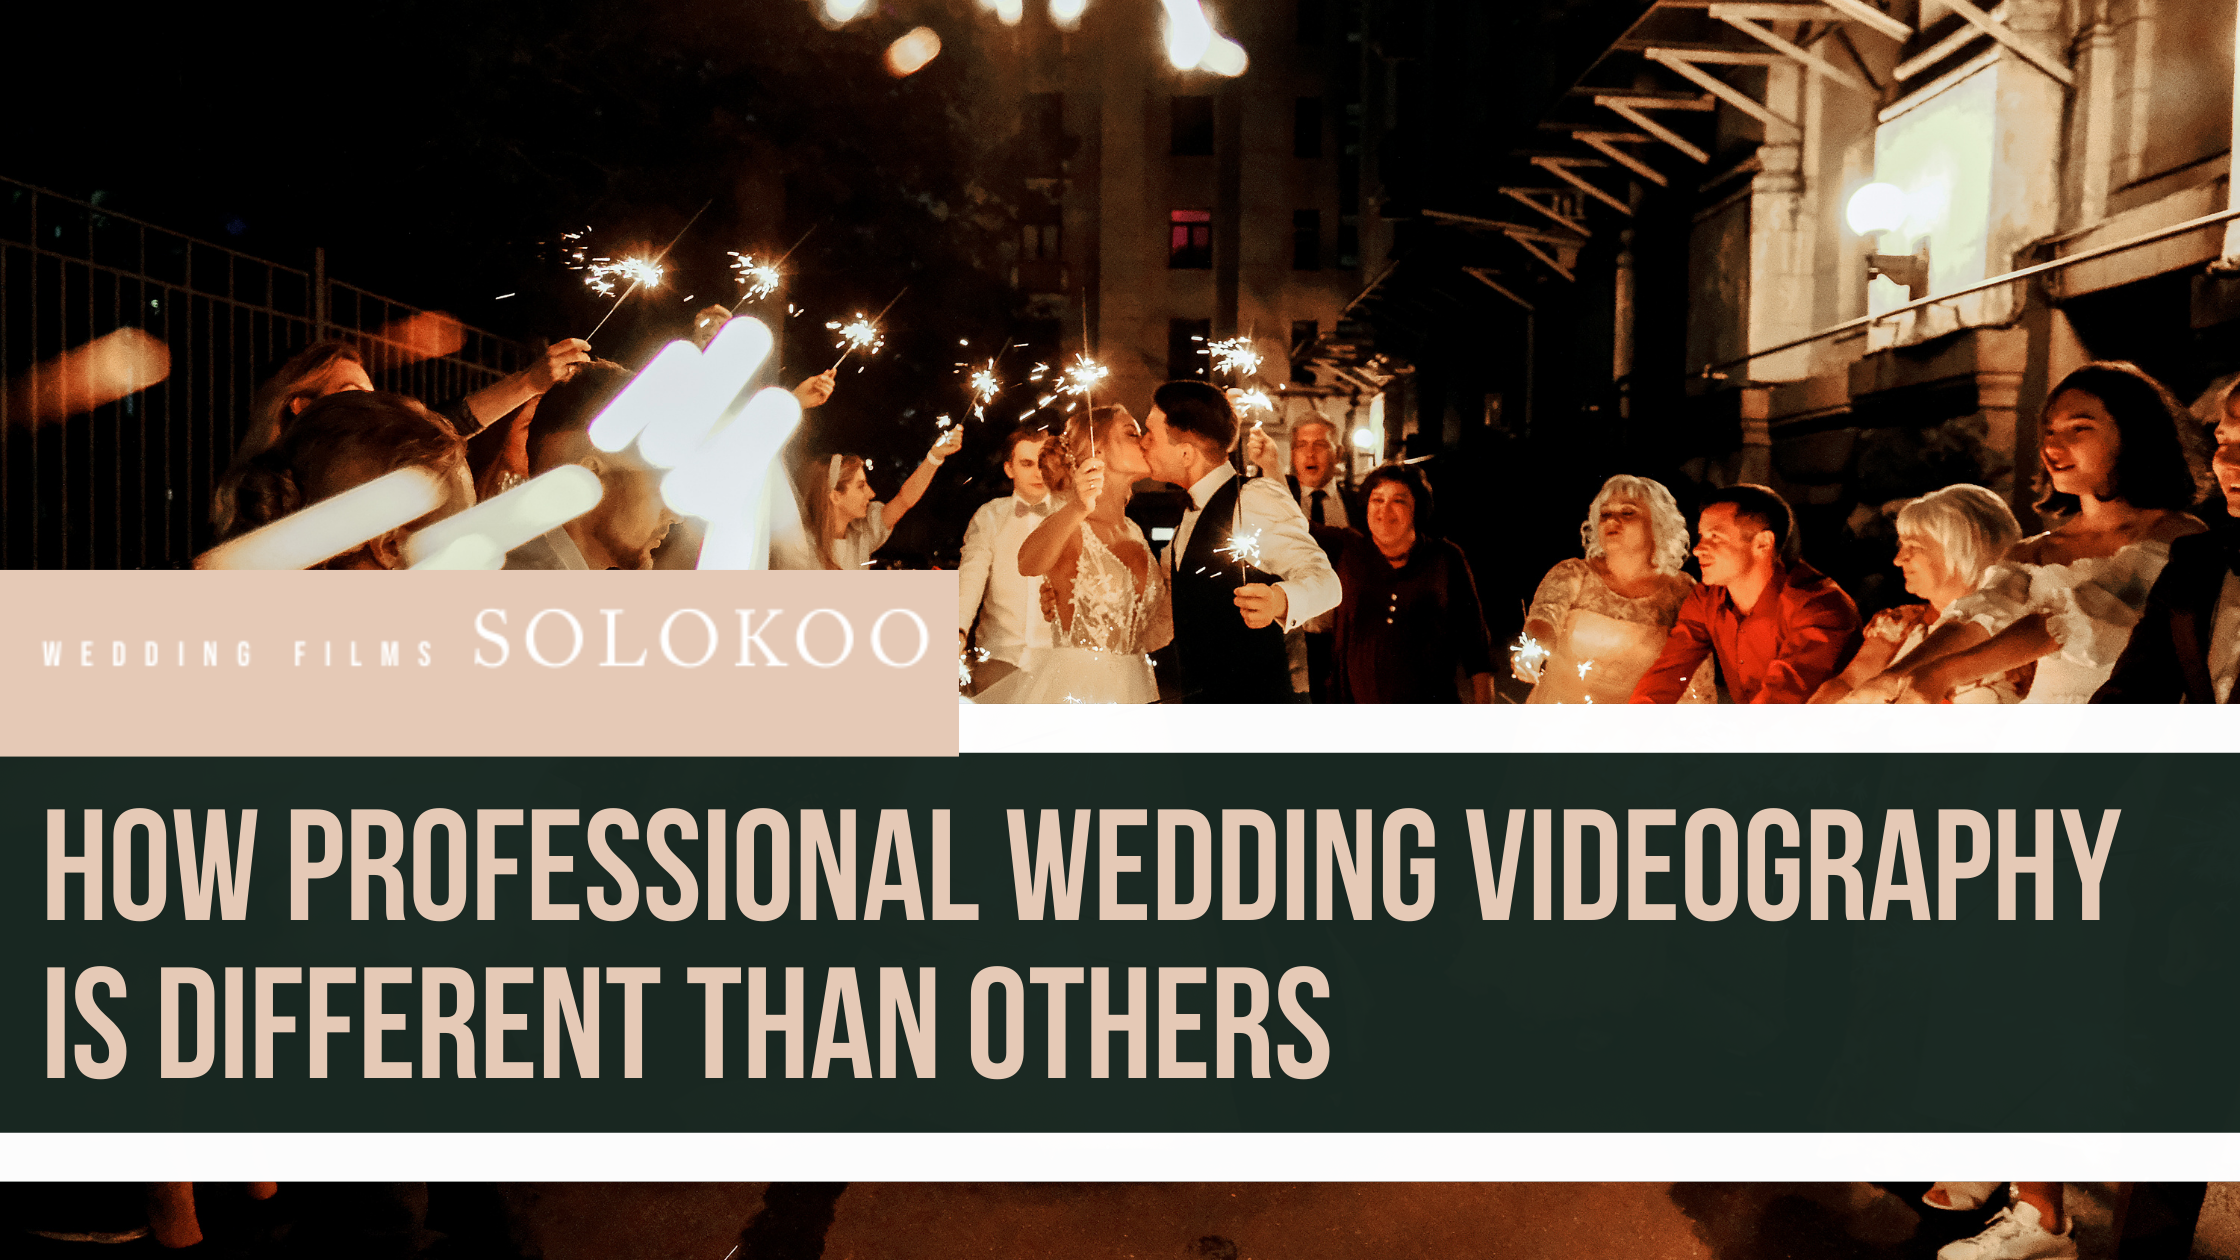 Professional Wedding Videography